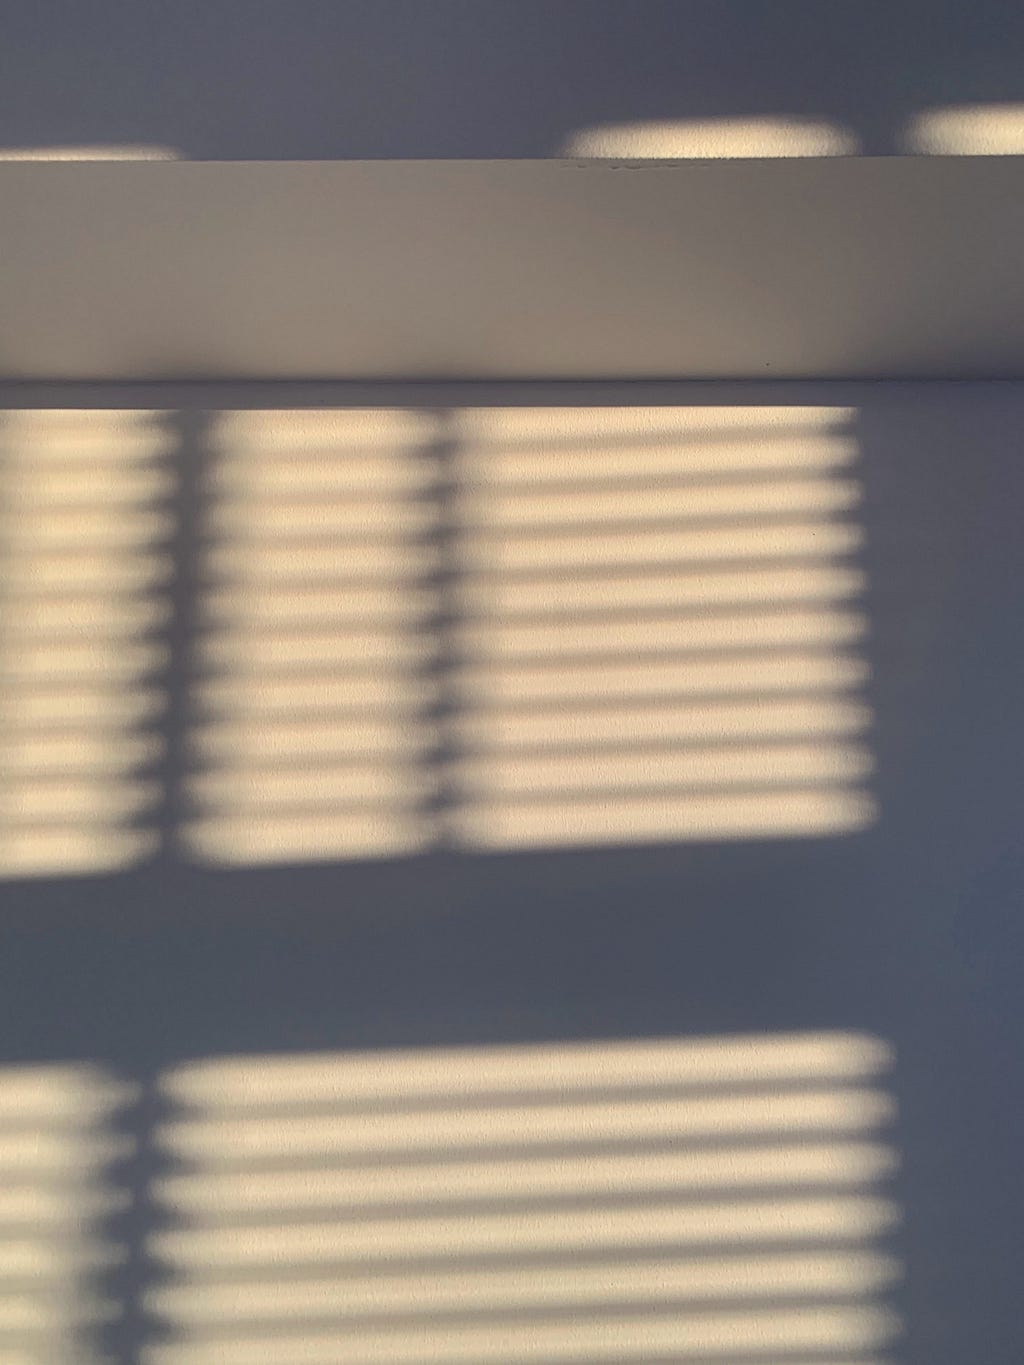 Sunlight filtered through window blinds falling across a blank wall.